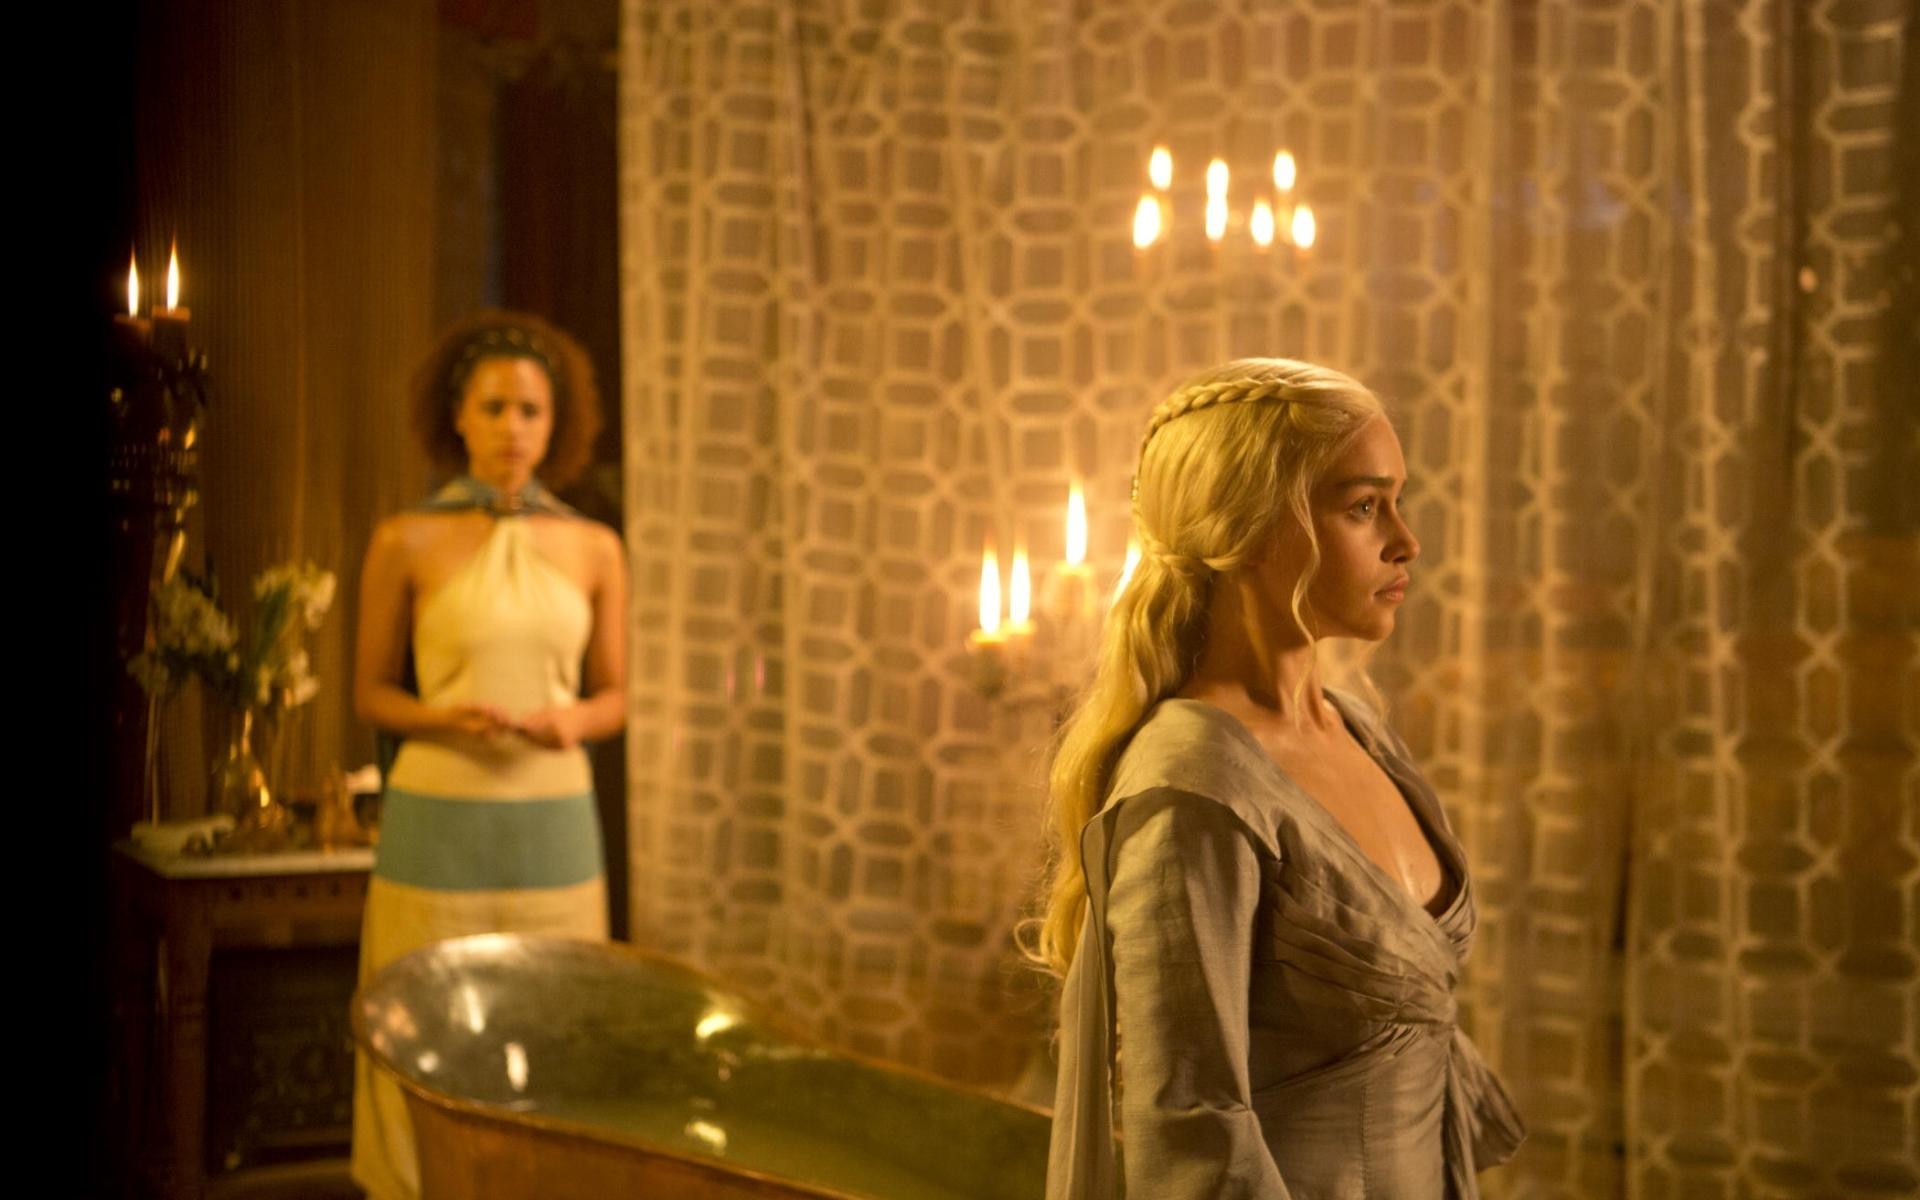 People 1920x1200 Daenerys Targaryen Game of Thrones women Emilia Clarke blonde TV series fantasy girl women indoors indoors bathtub actress celebrity